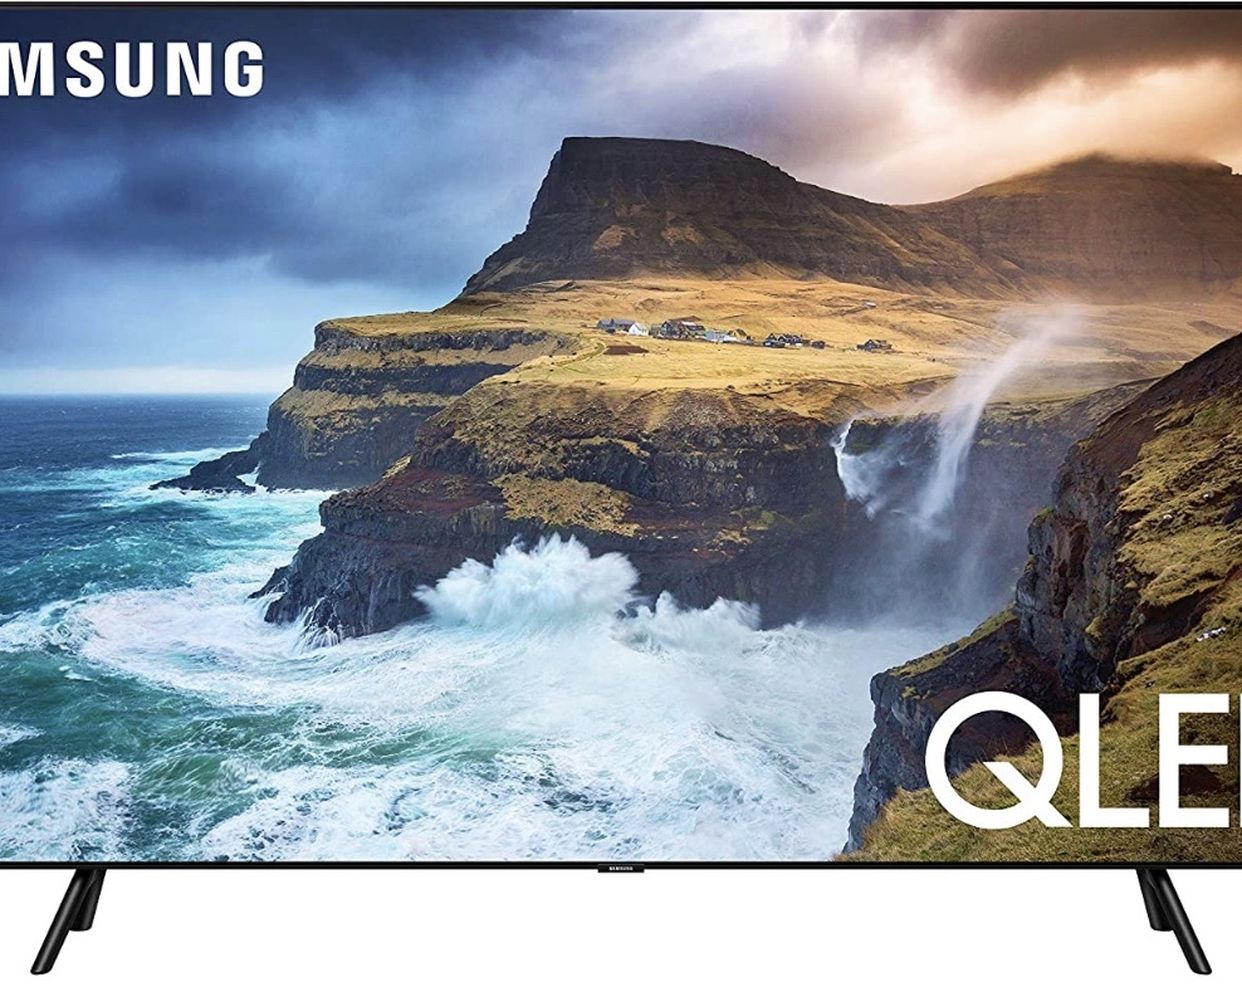 Samsung Q70 Series 55-Inch Smart TV, Flat QLED 4K UHD HDR - 2019 Model